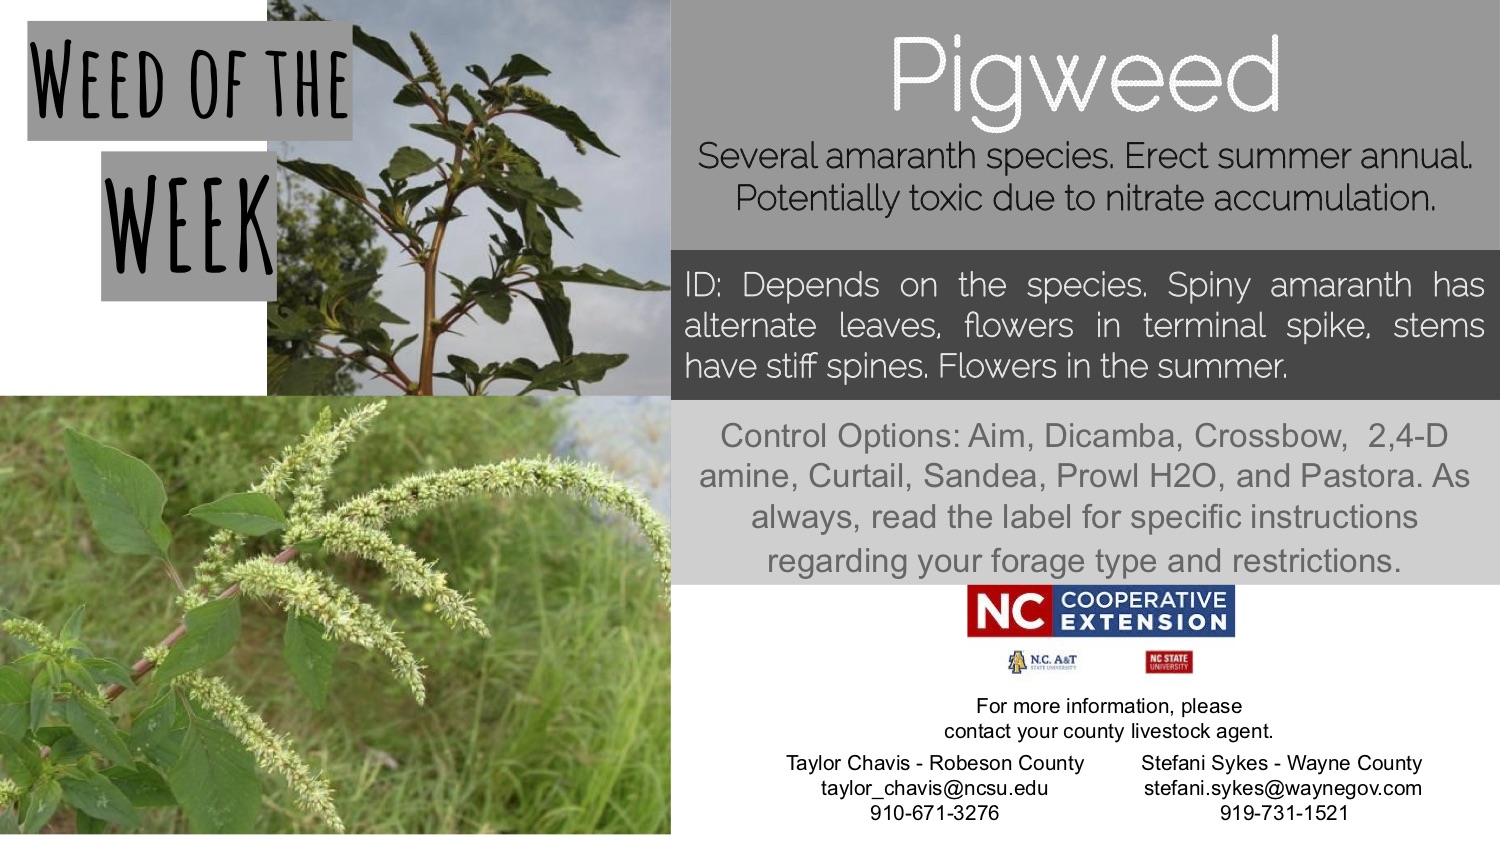 Information on Pigweed